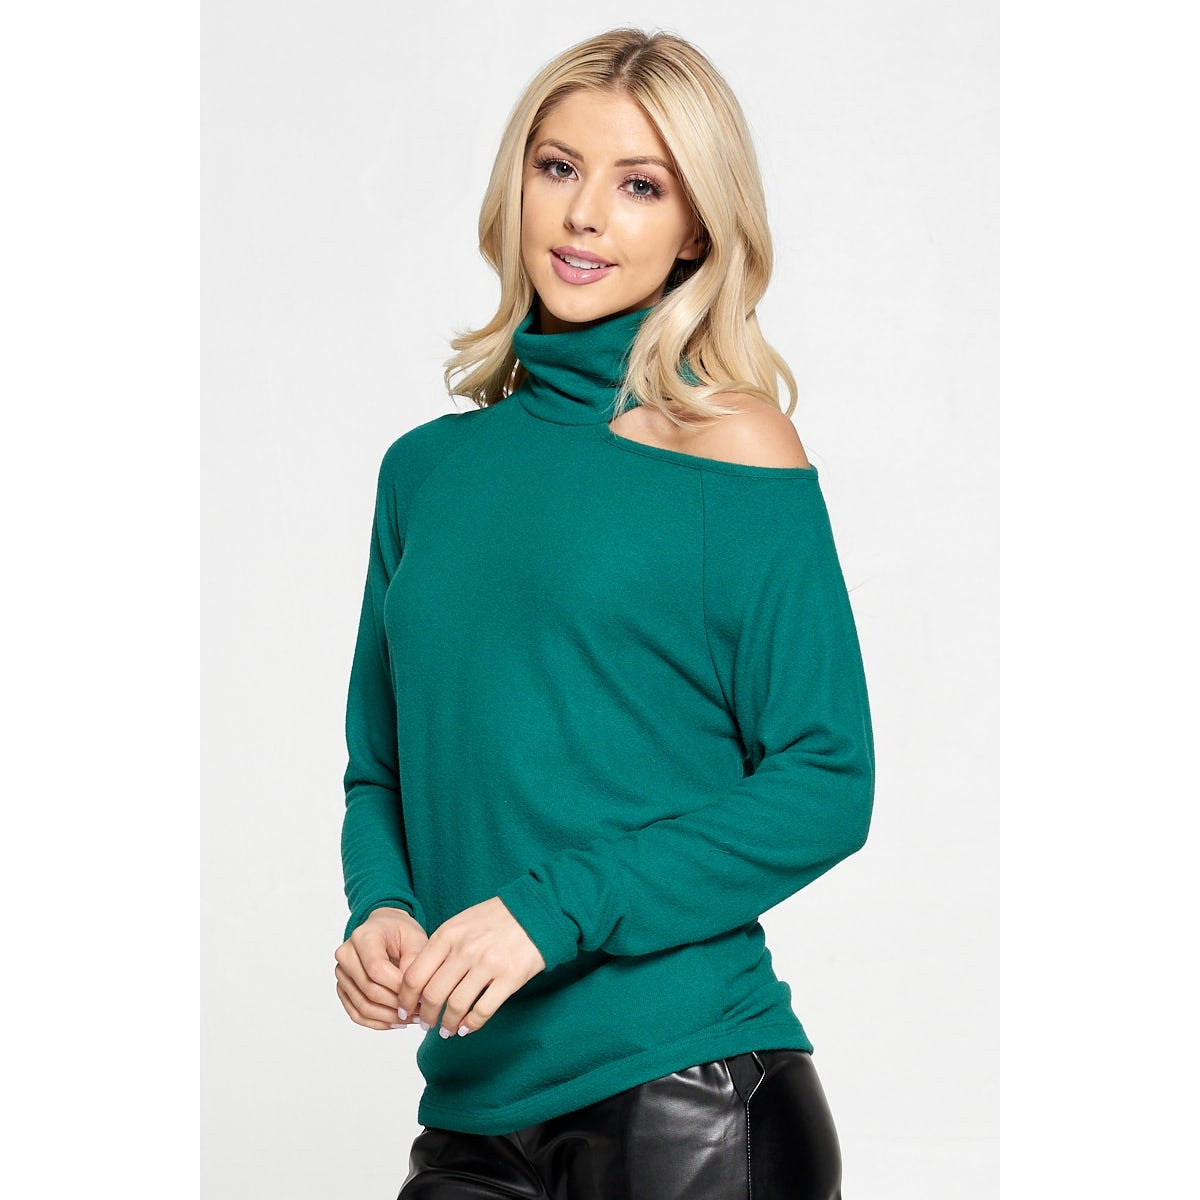 Blonde with green cold shoulder turtleneck sweater